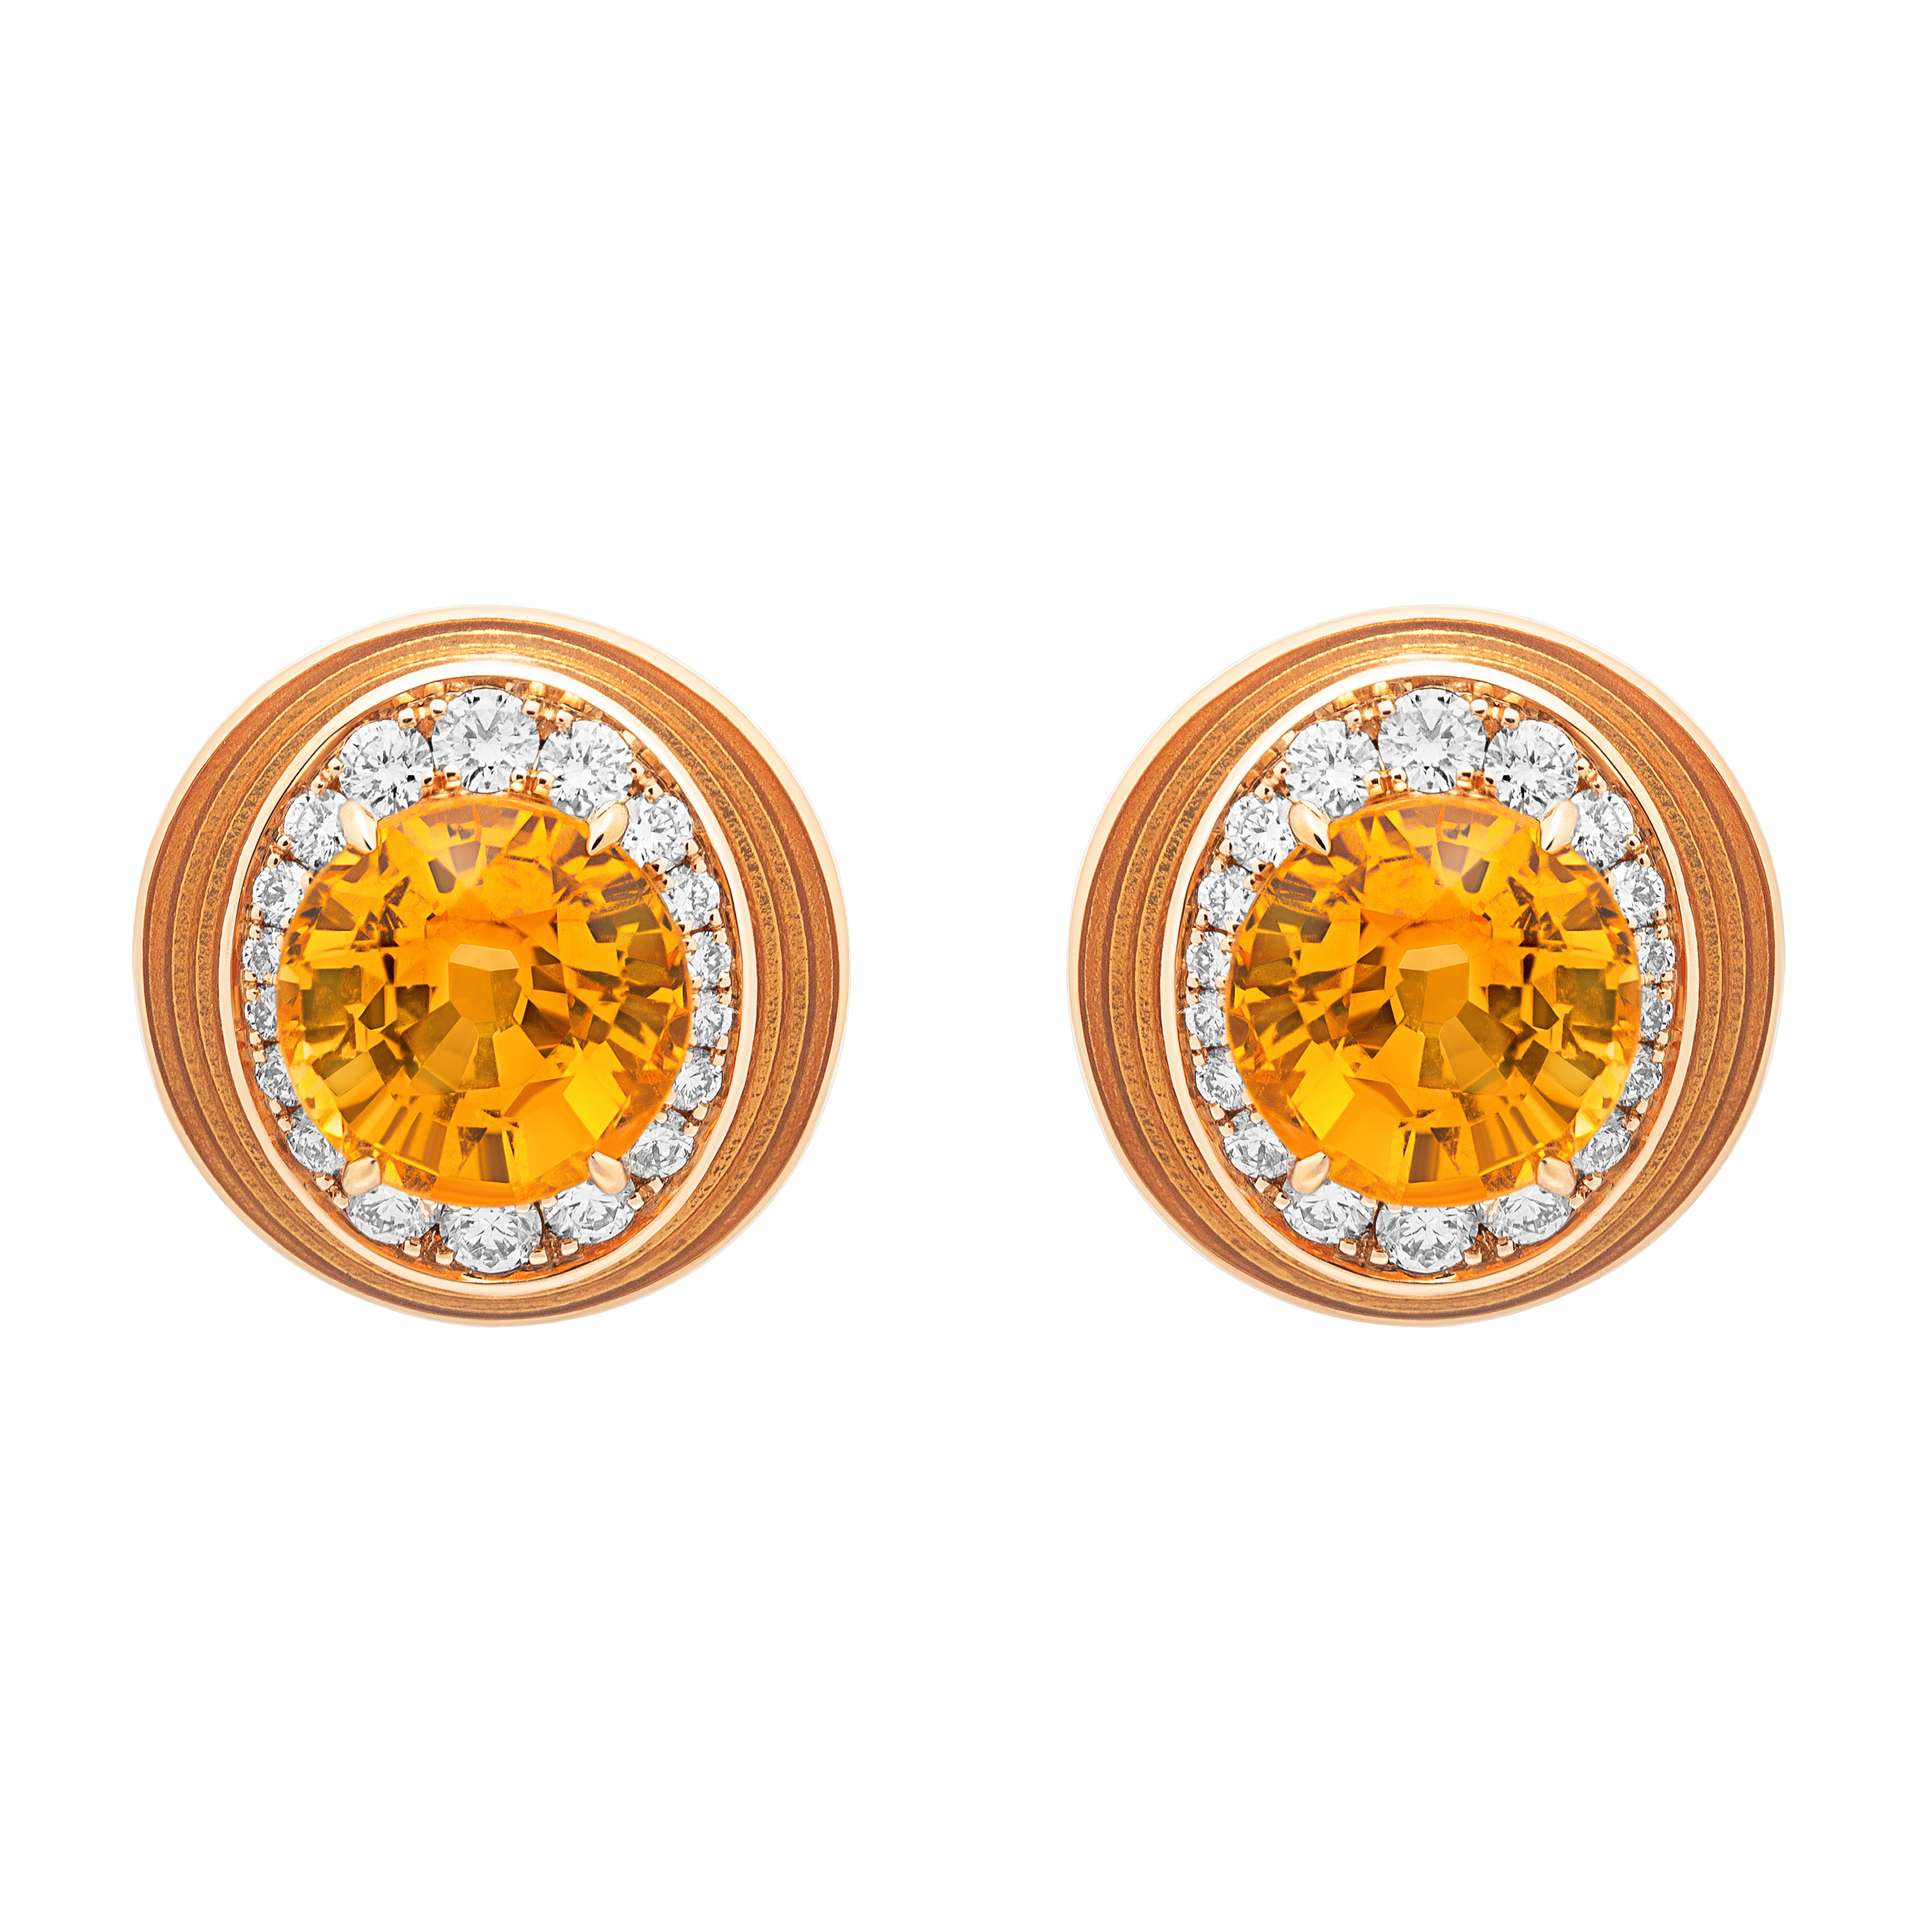 E 0143-30 18K Yellow Gold, Spessartine, Diamonds Earrings